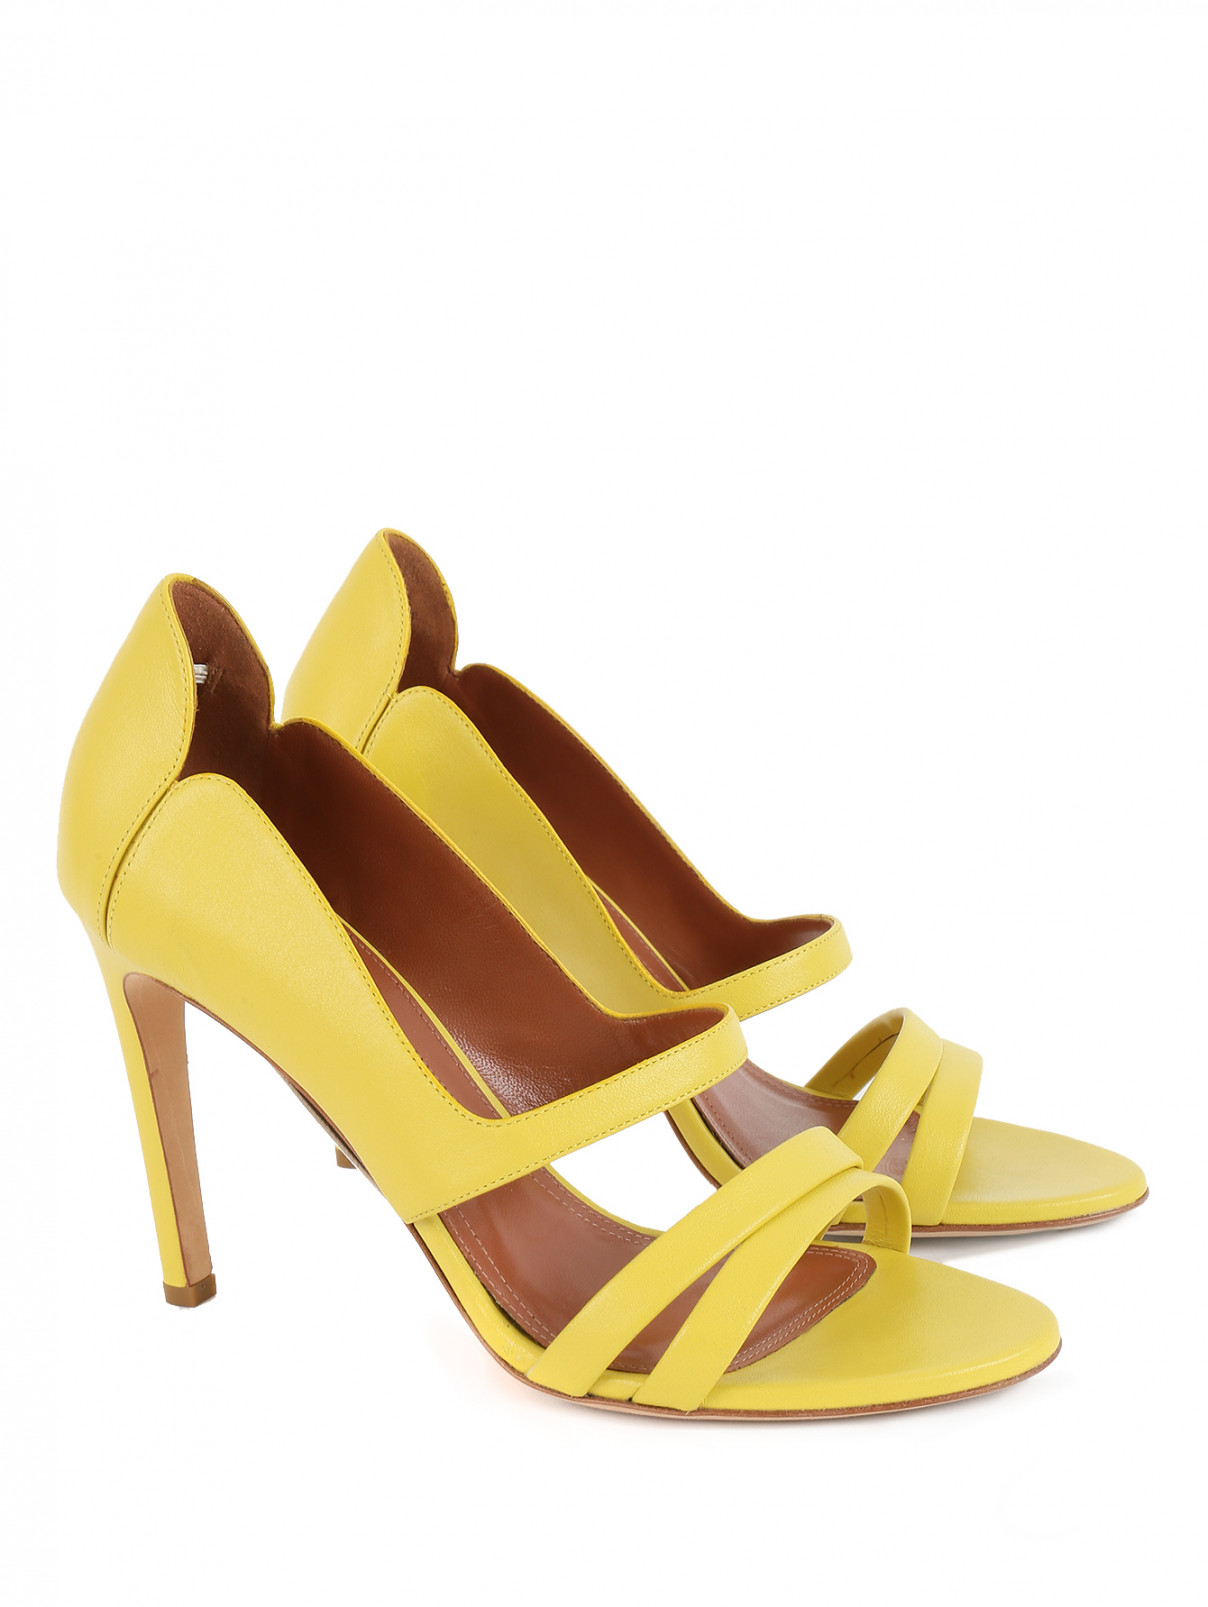 Туфли из гладкой кожи Alberta Ferretti  –  Общий вид  – Цвет:  Желтый